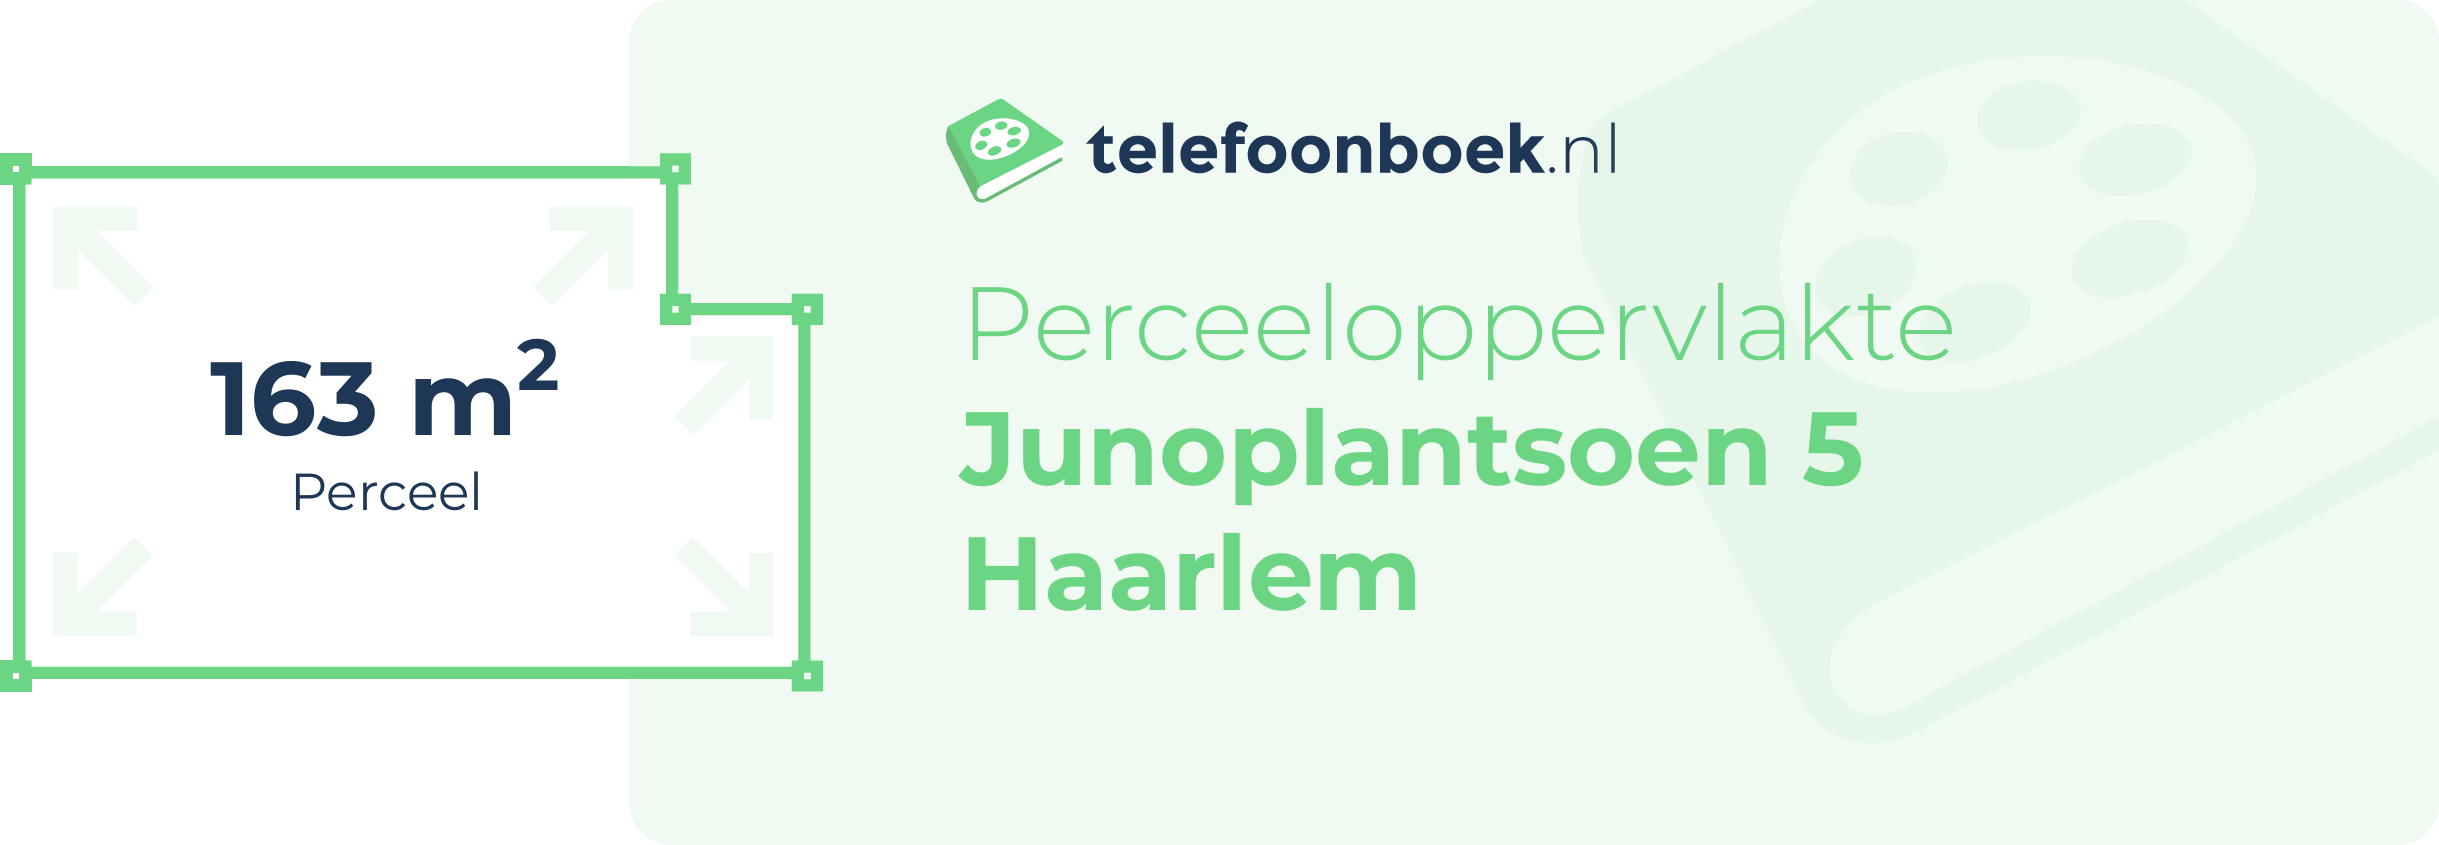 Perceeloppervlakte Junoplantsoen 5 Haarlem